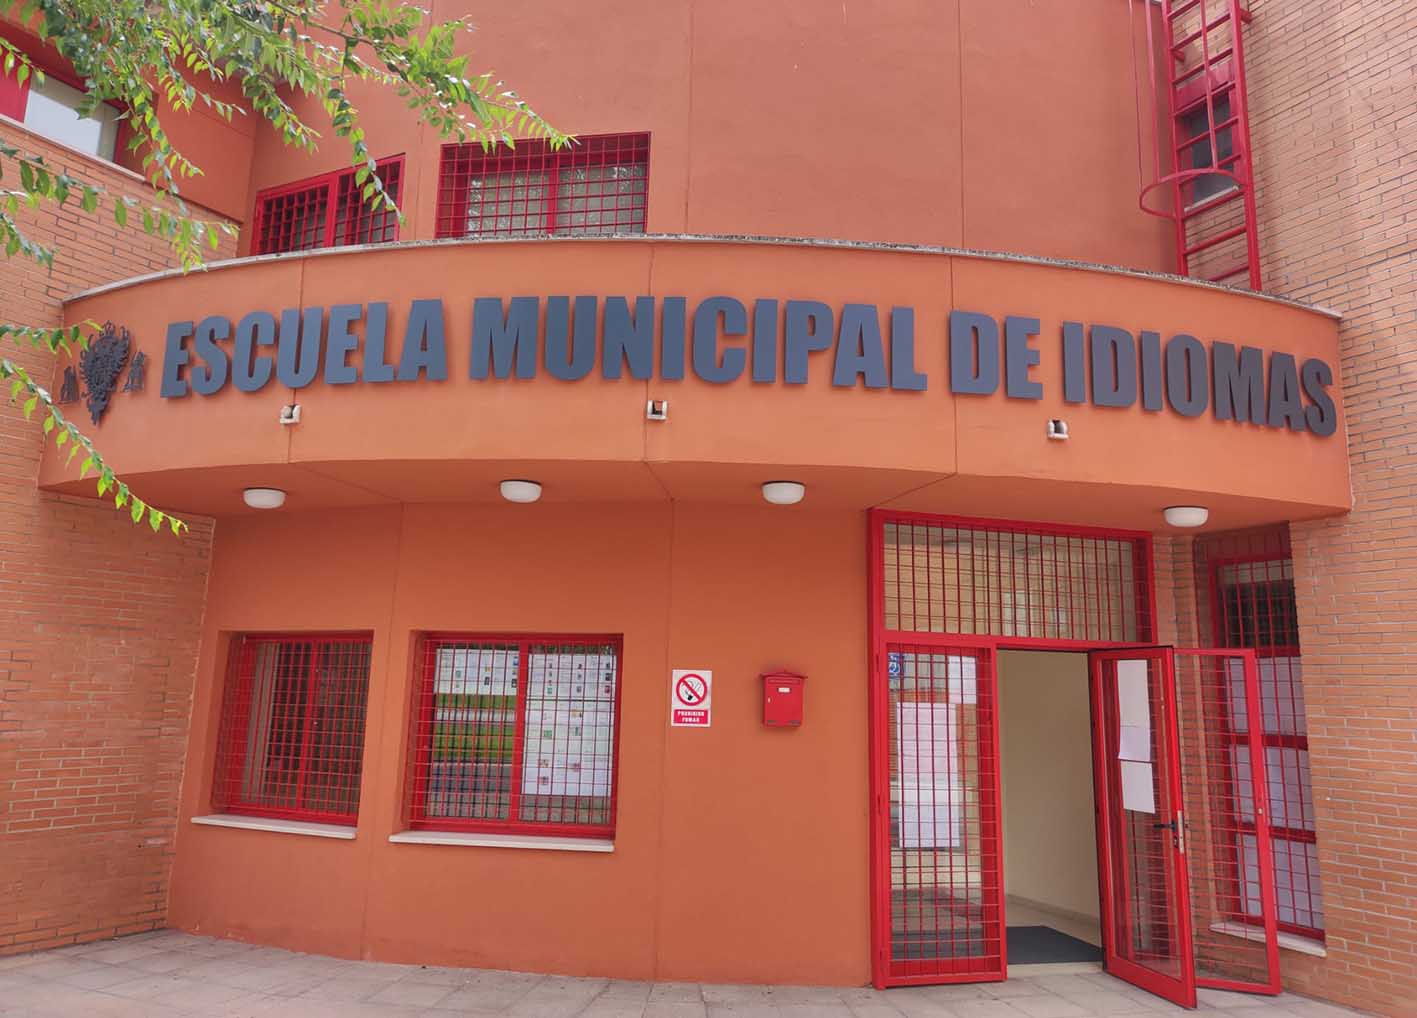 Escuela Municipal de Idiomas de Toledo